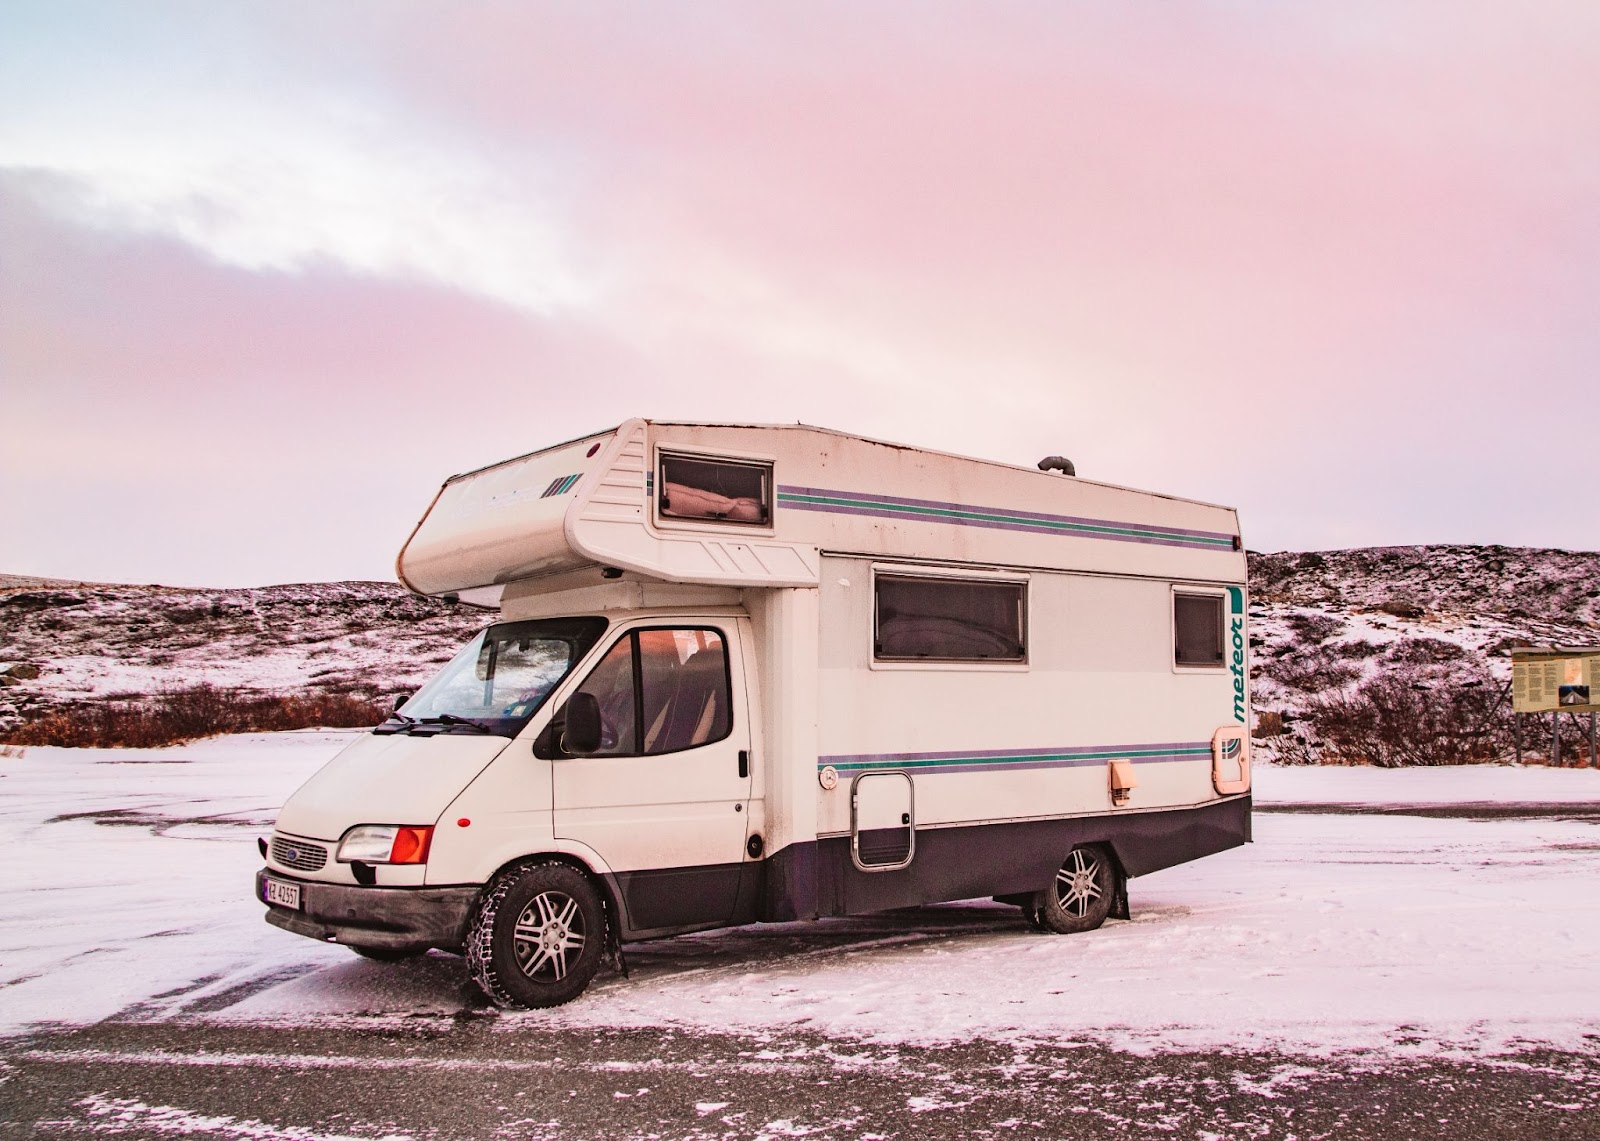 Camper on snowy tundra